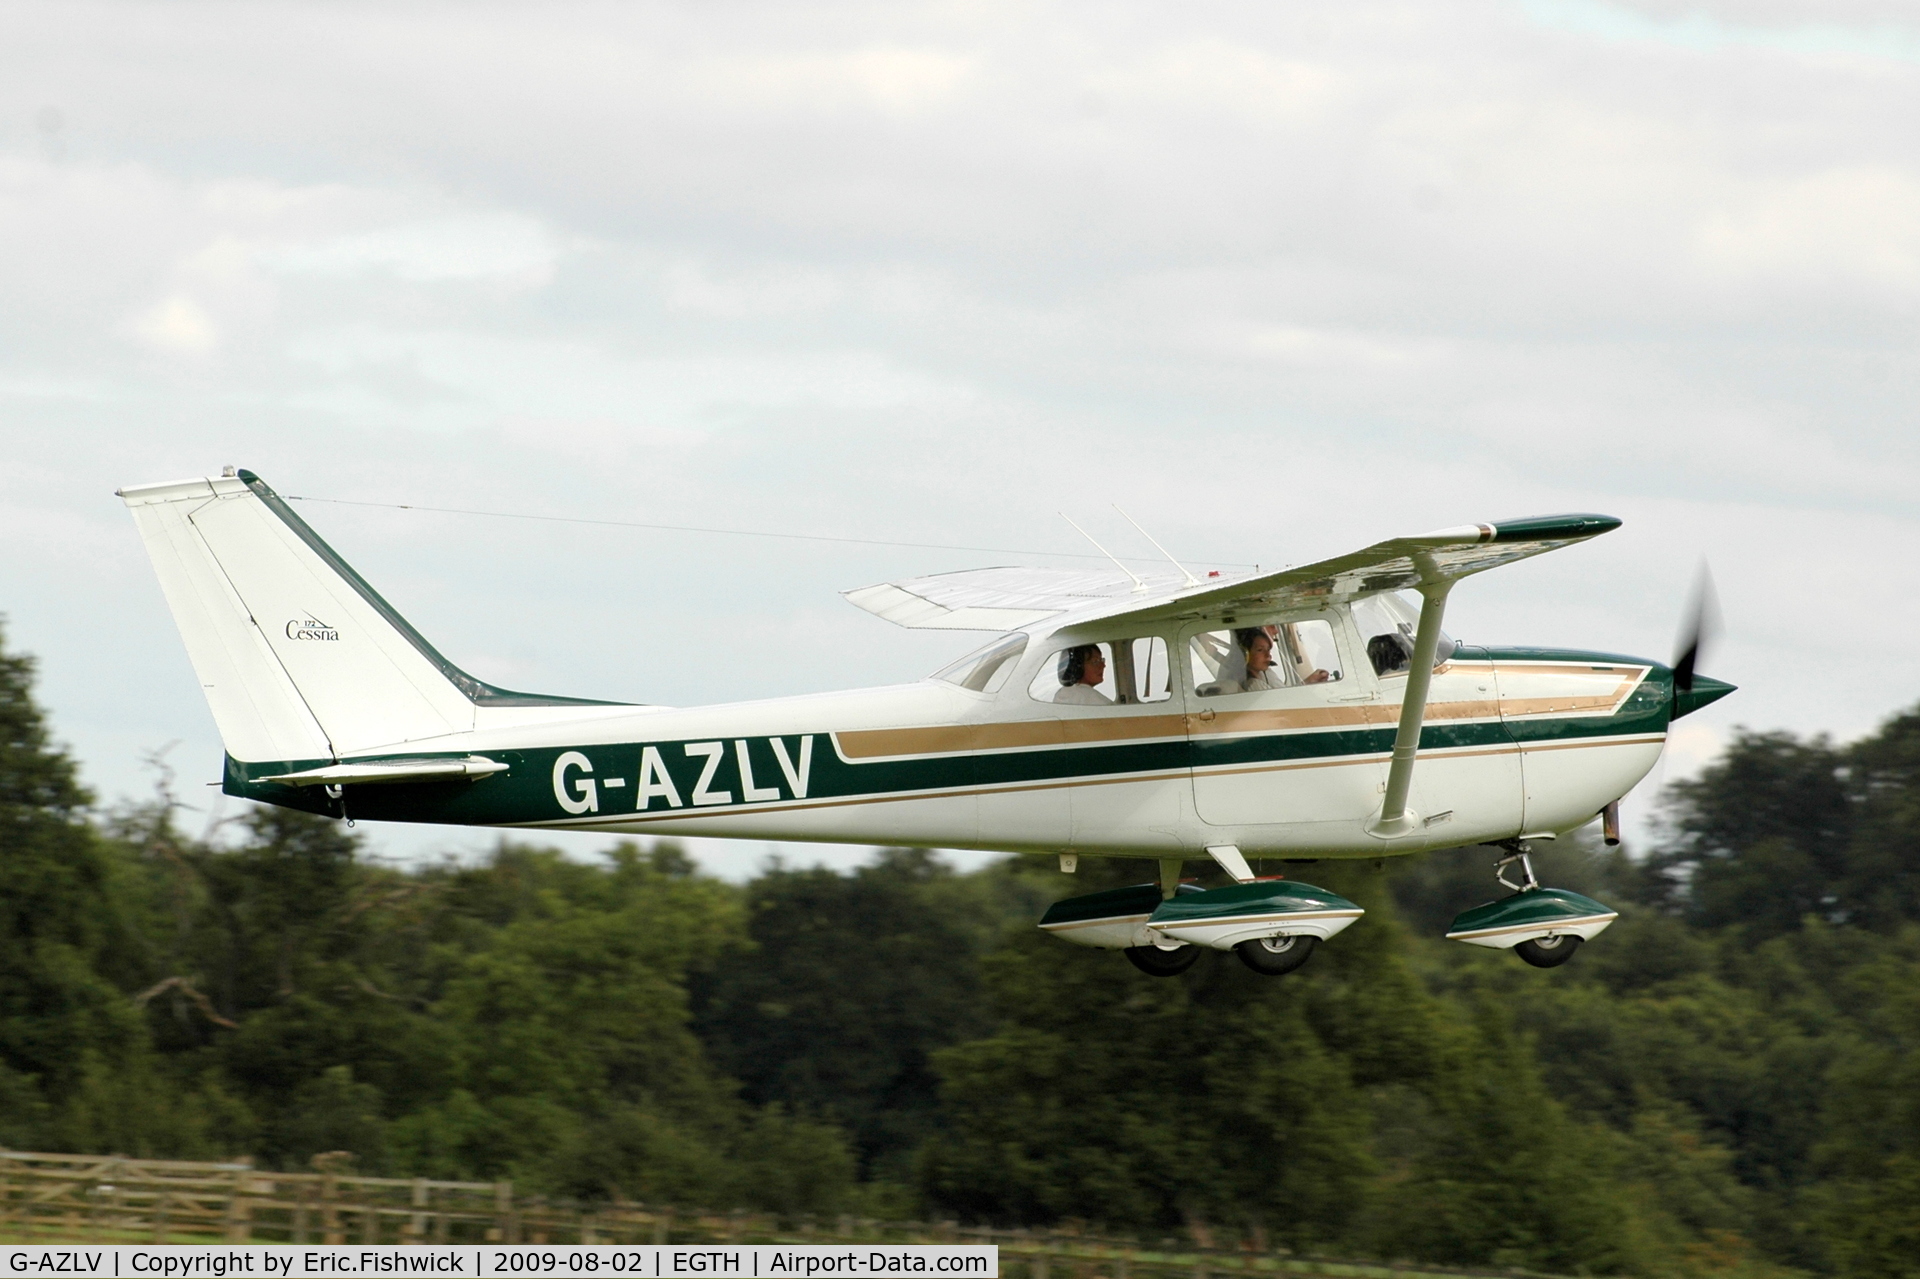 G-AZLV, 1969 Cessna 172K Skyhawk C/N 17257908, G-AZLV at Shuttleworth Military Pagent Air Display Aug 09